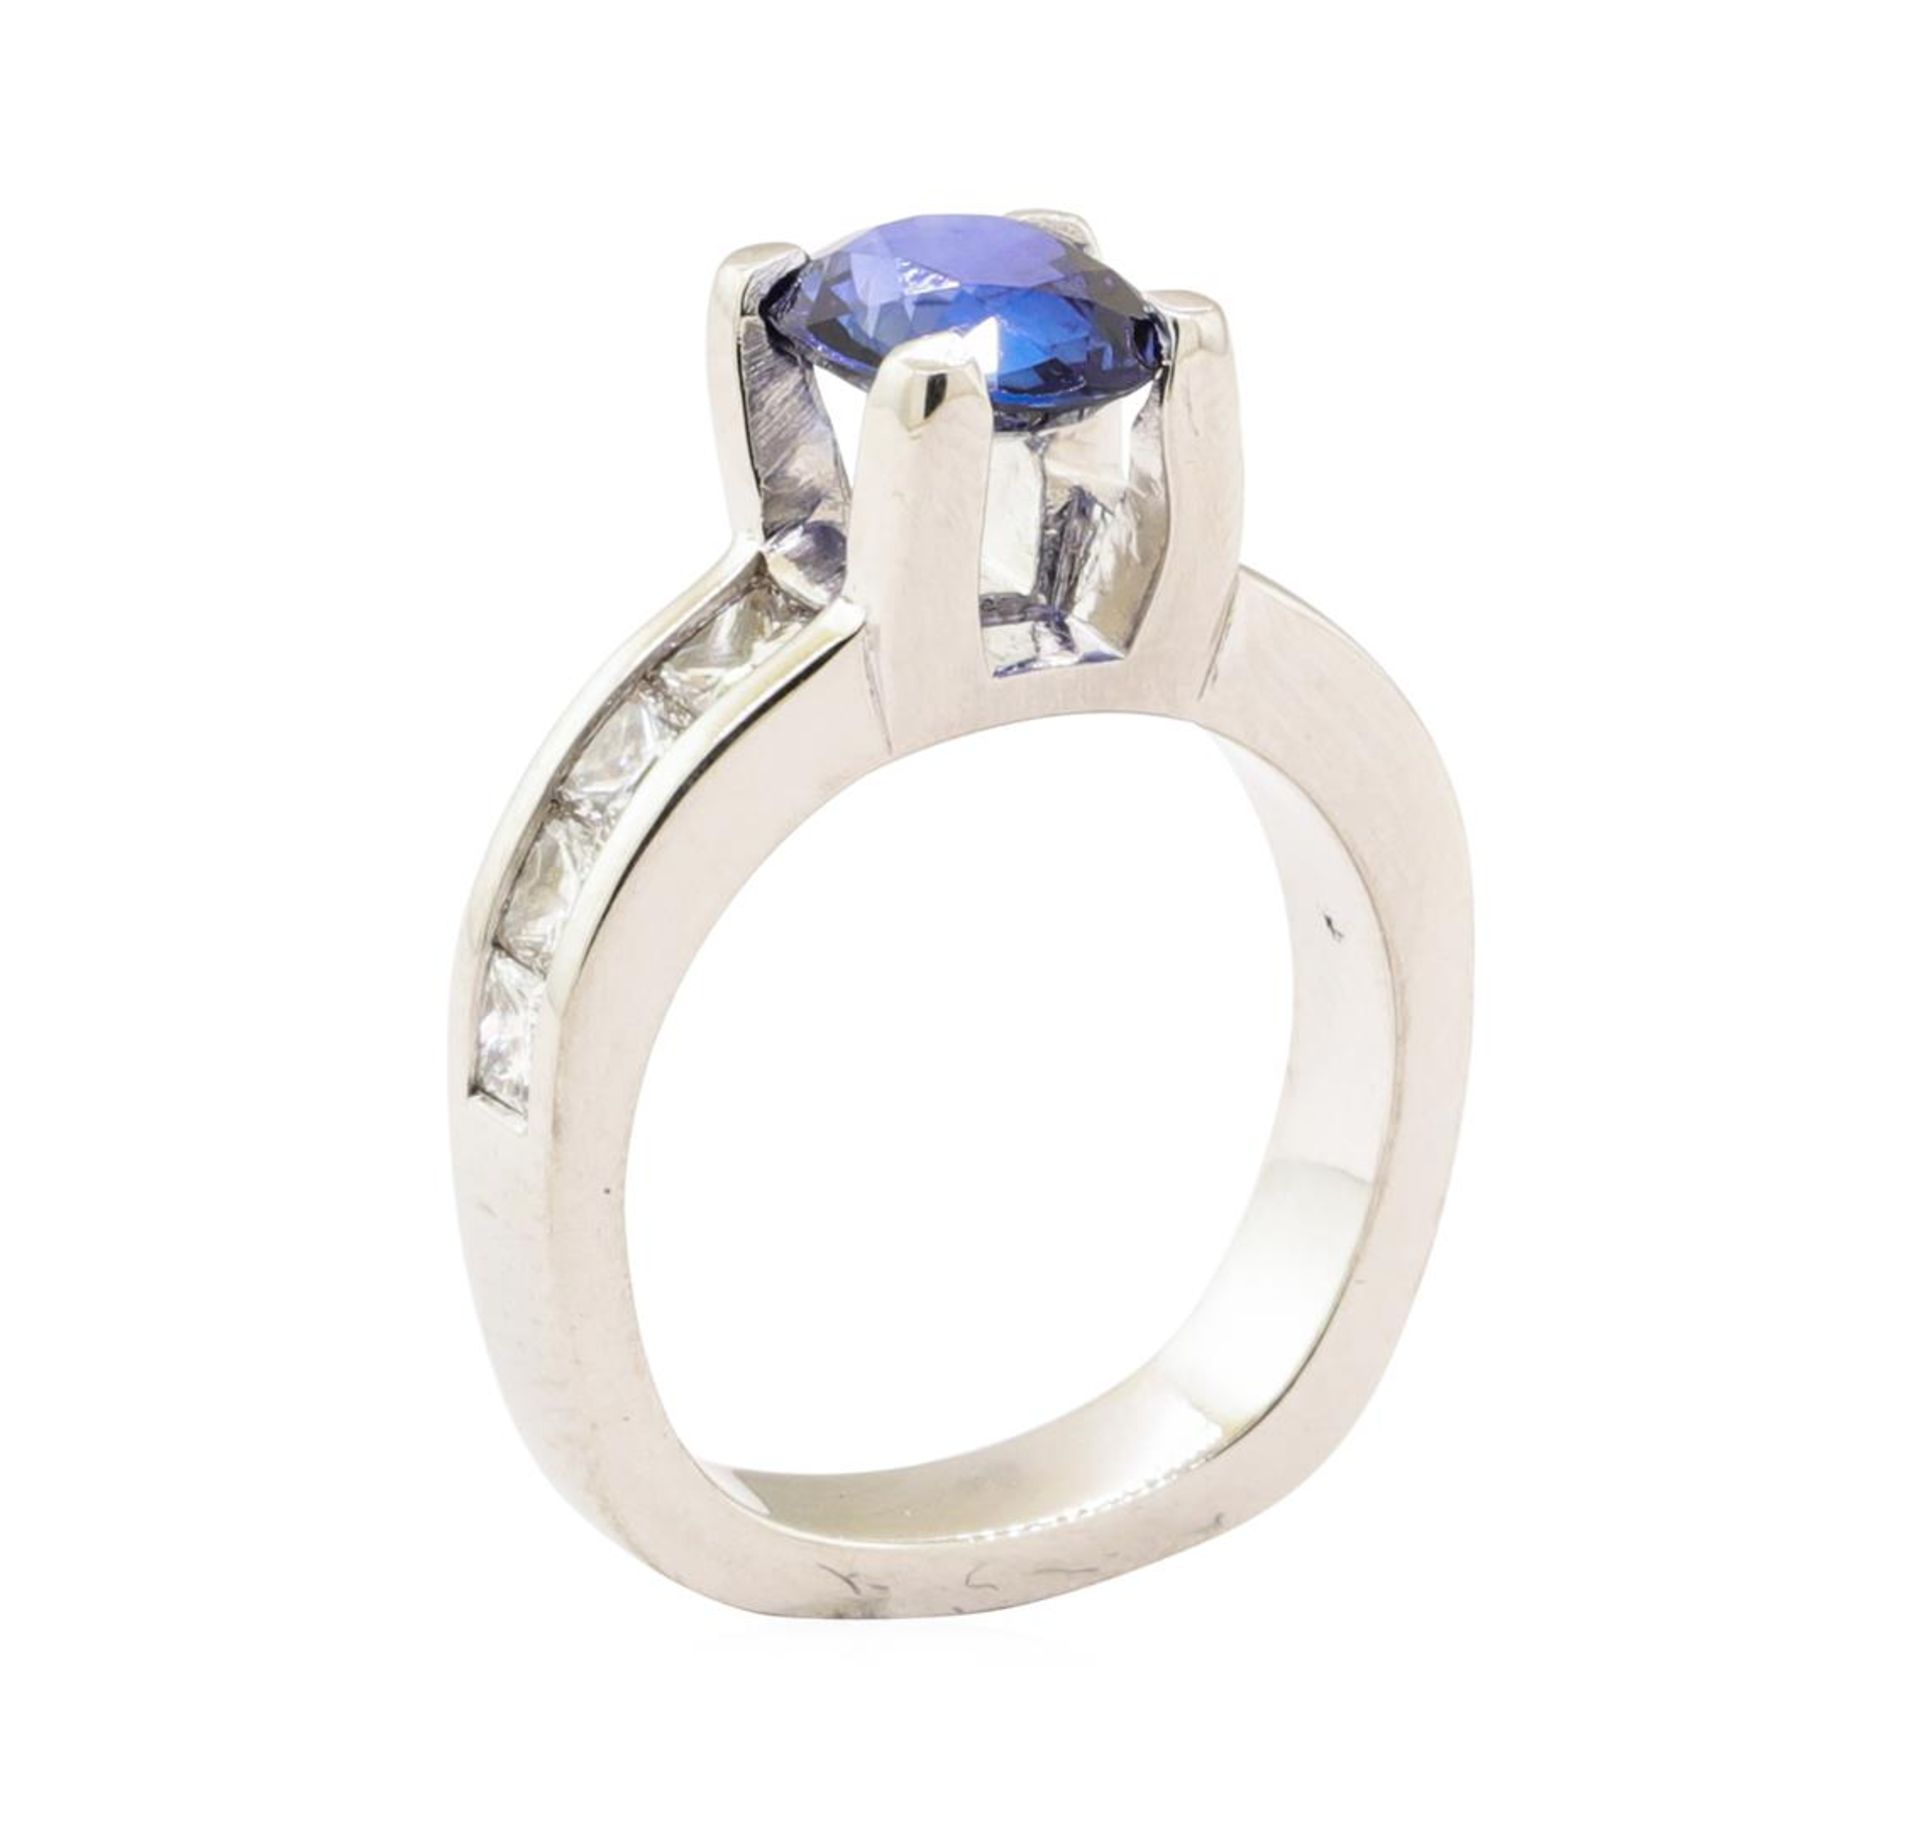 3.01 ctw Blue Sapphire And Diamond Ring - Platinum - Image 4 of 5